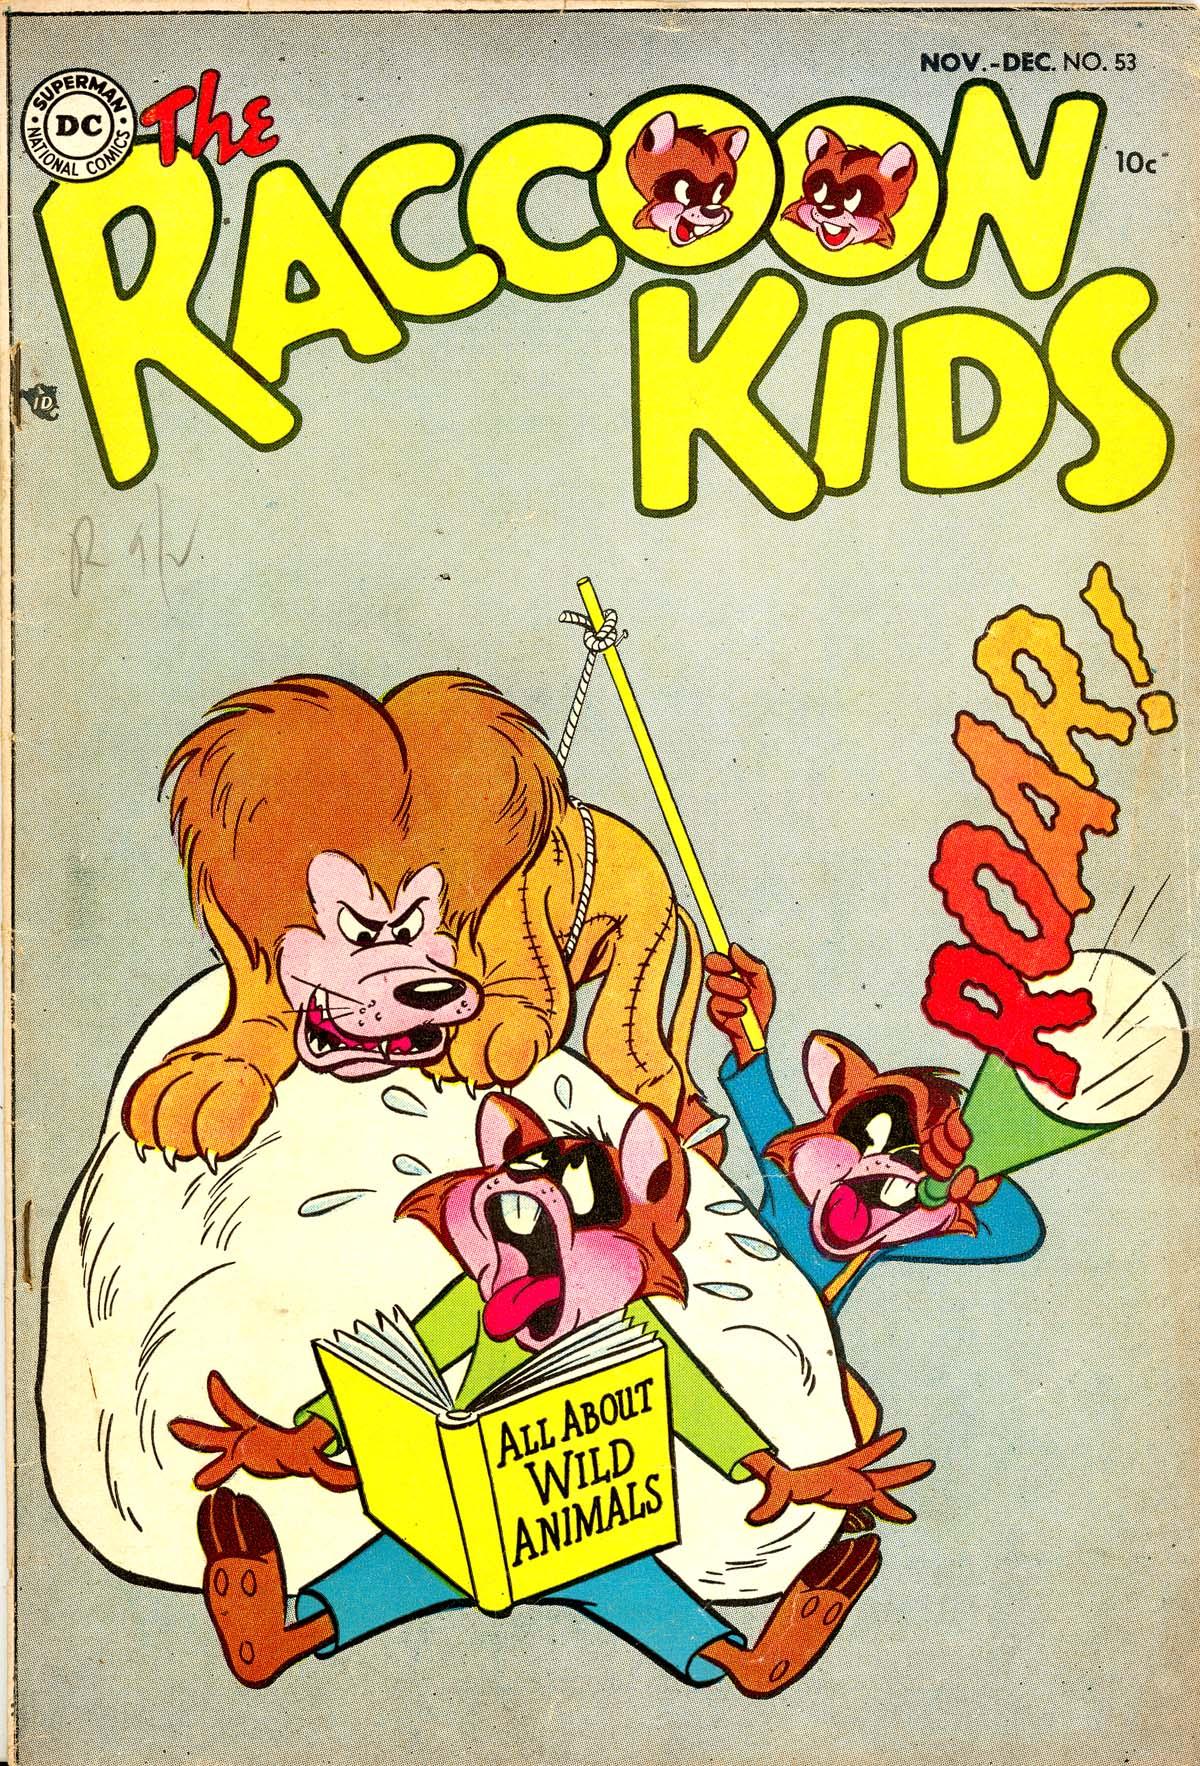 Raccoon Kids Vol. 1 #53